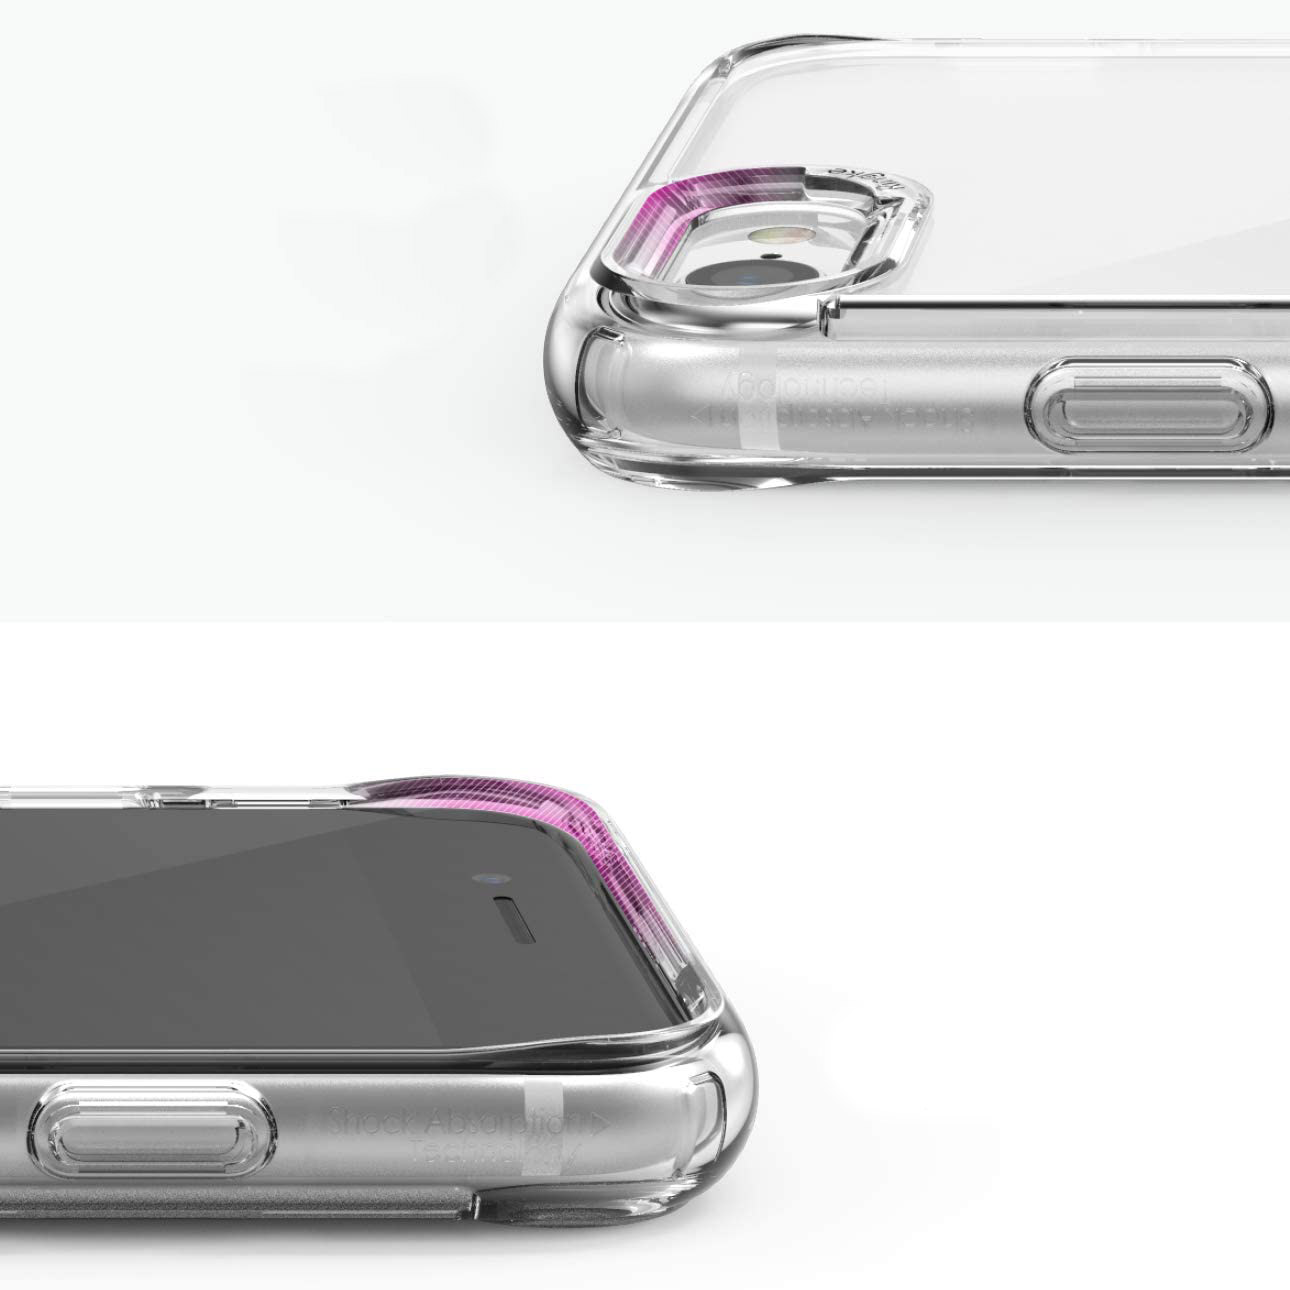 Schutzhülle Rearth Ringke Fusion für iPhone SE 2020, 8/7, transparent